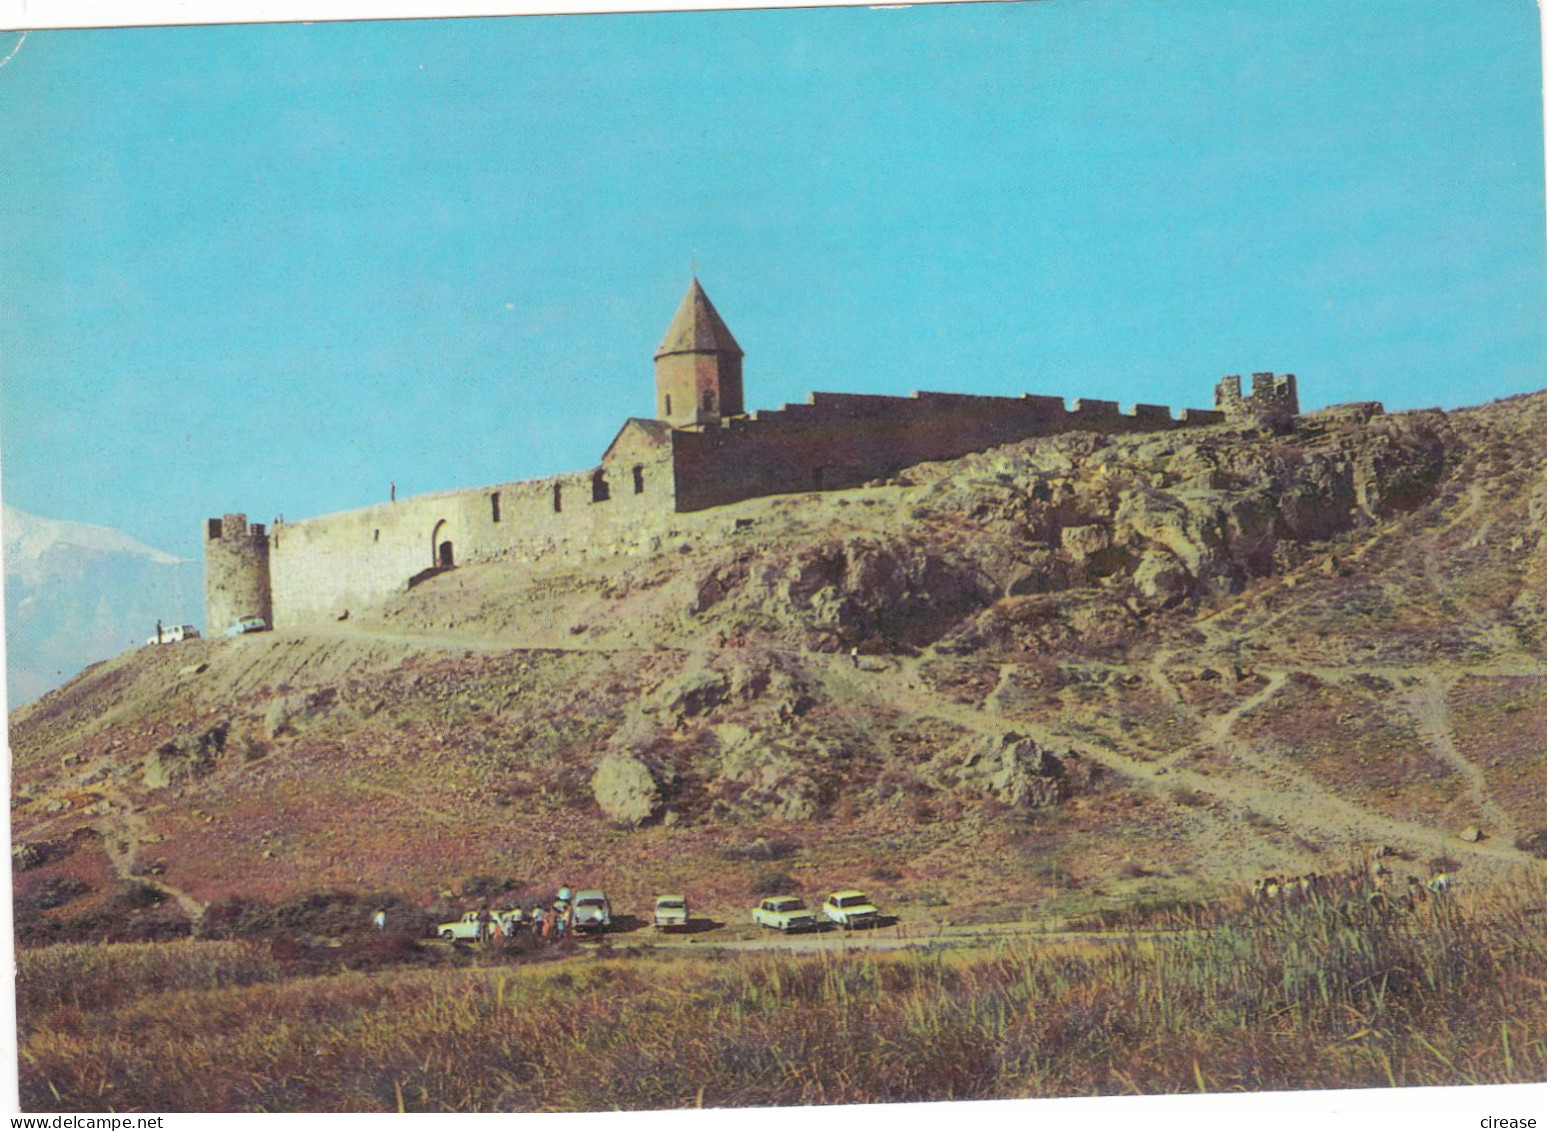 ARARAT DISTRICT ARMENIA RUSSIA CCCP URSS  POSTAL STATIONERY  1986 - Brieven En Documenten